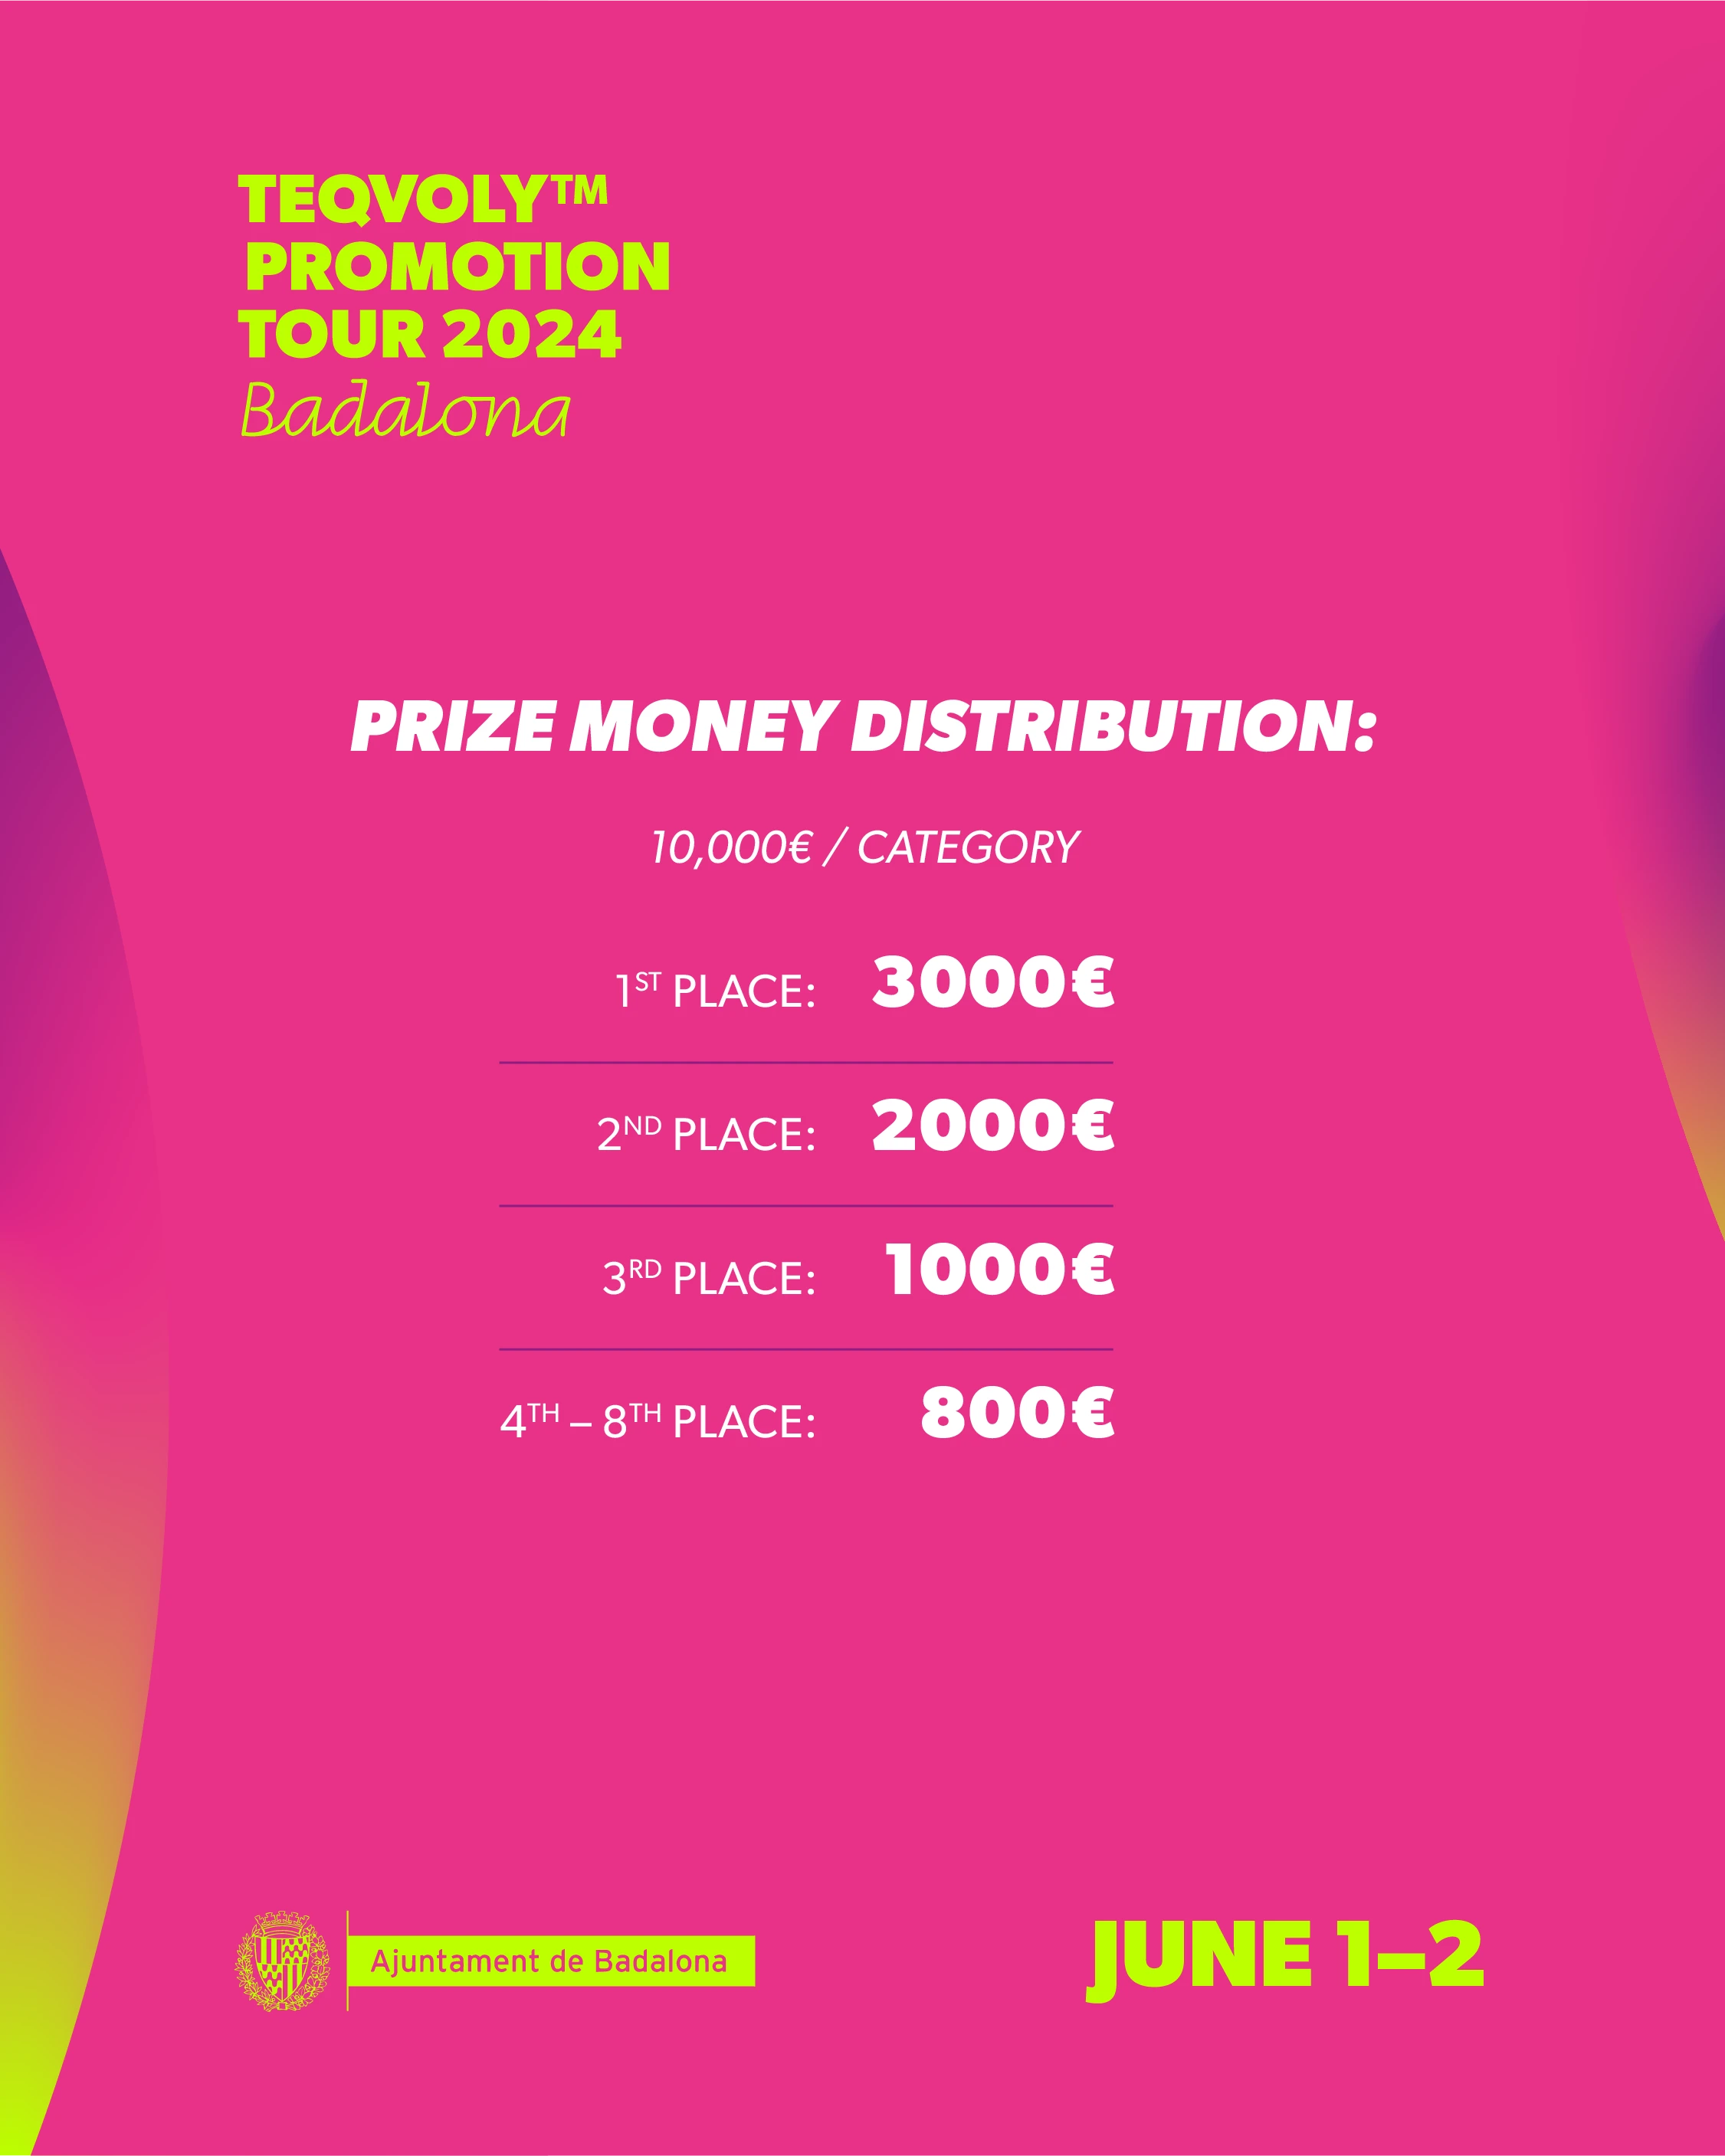 Prize money distribution